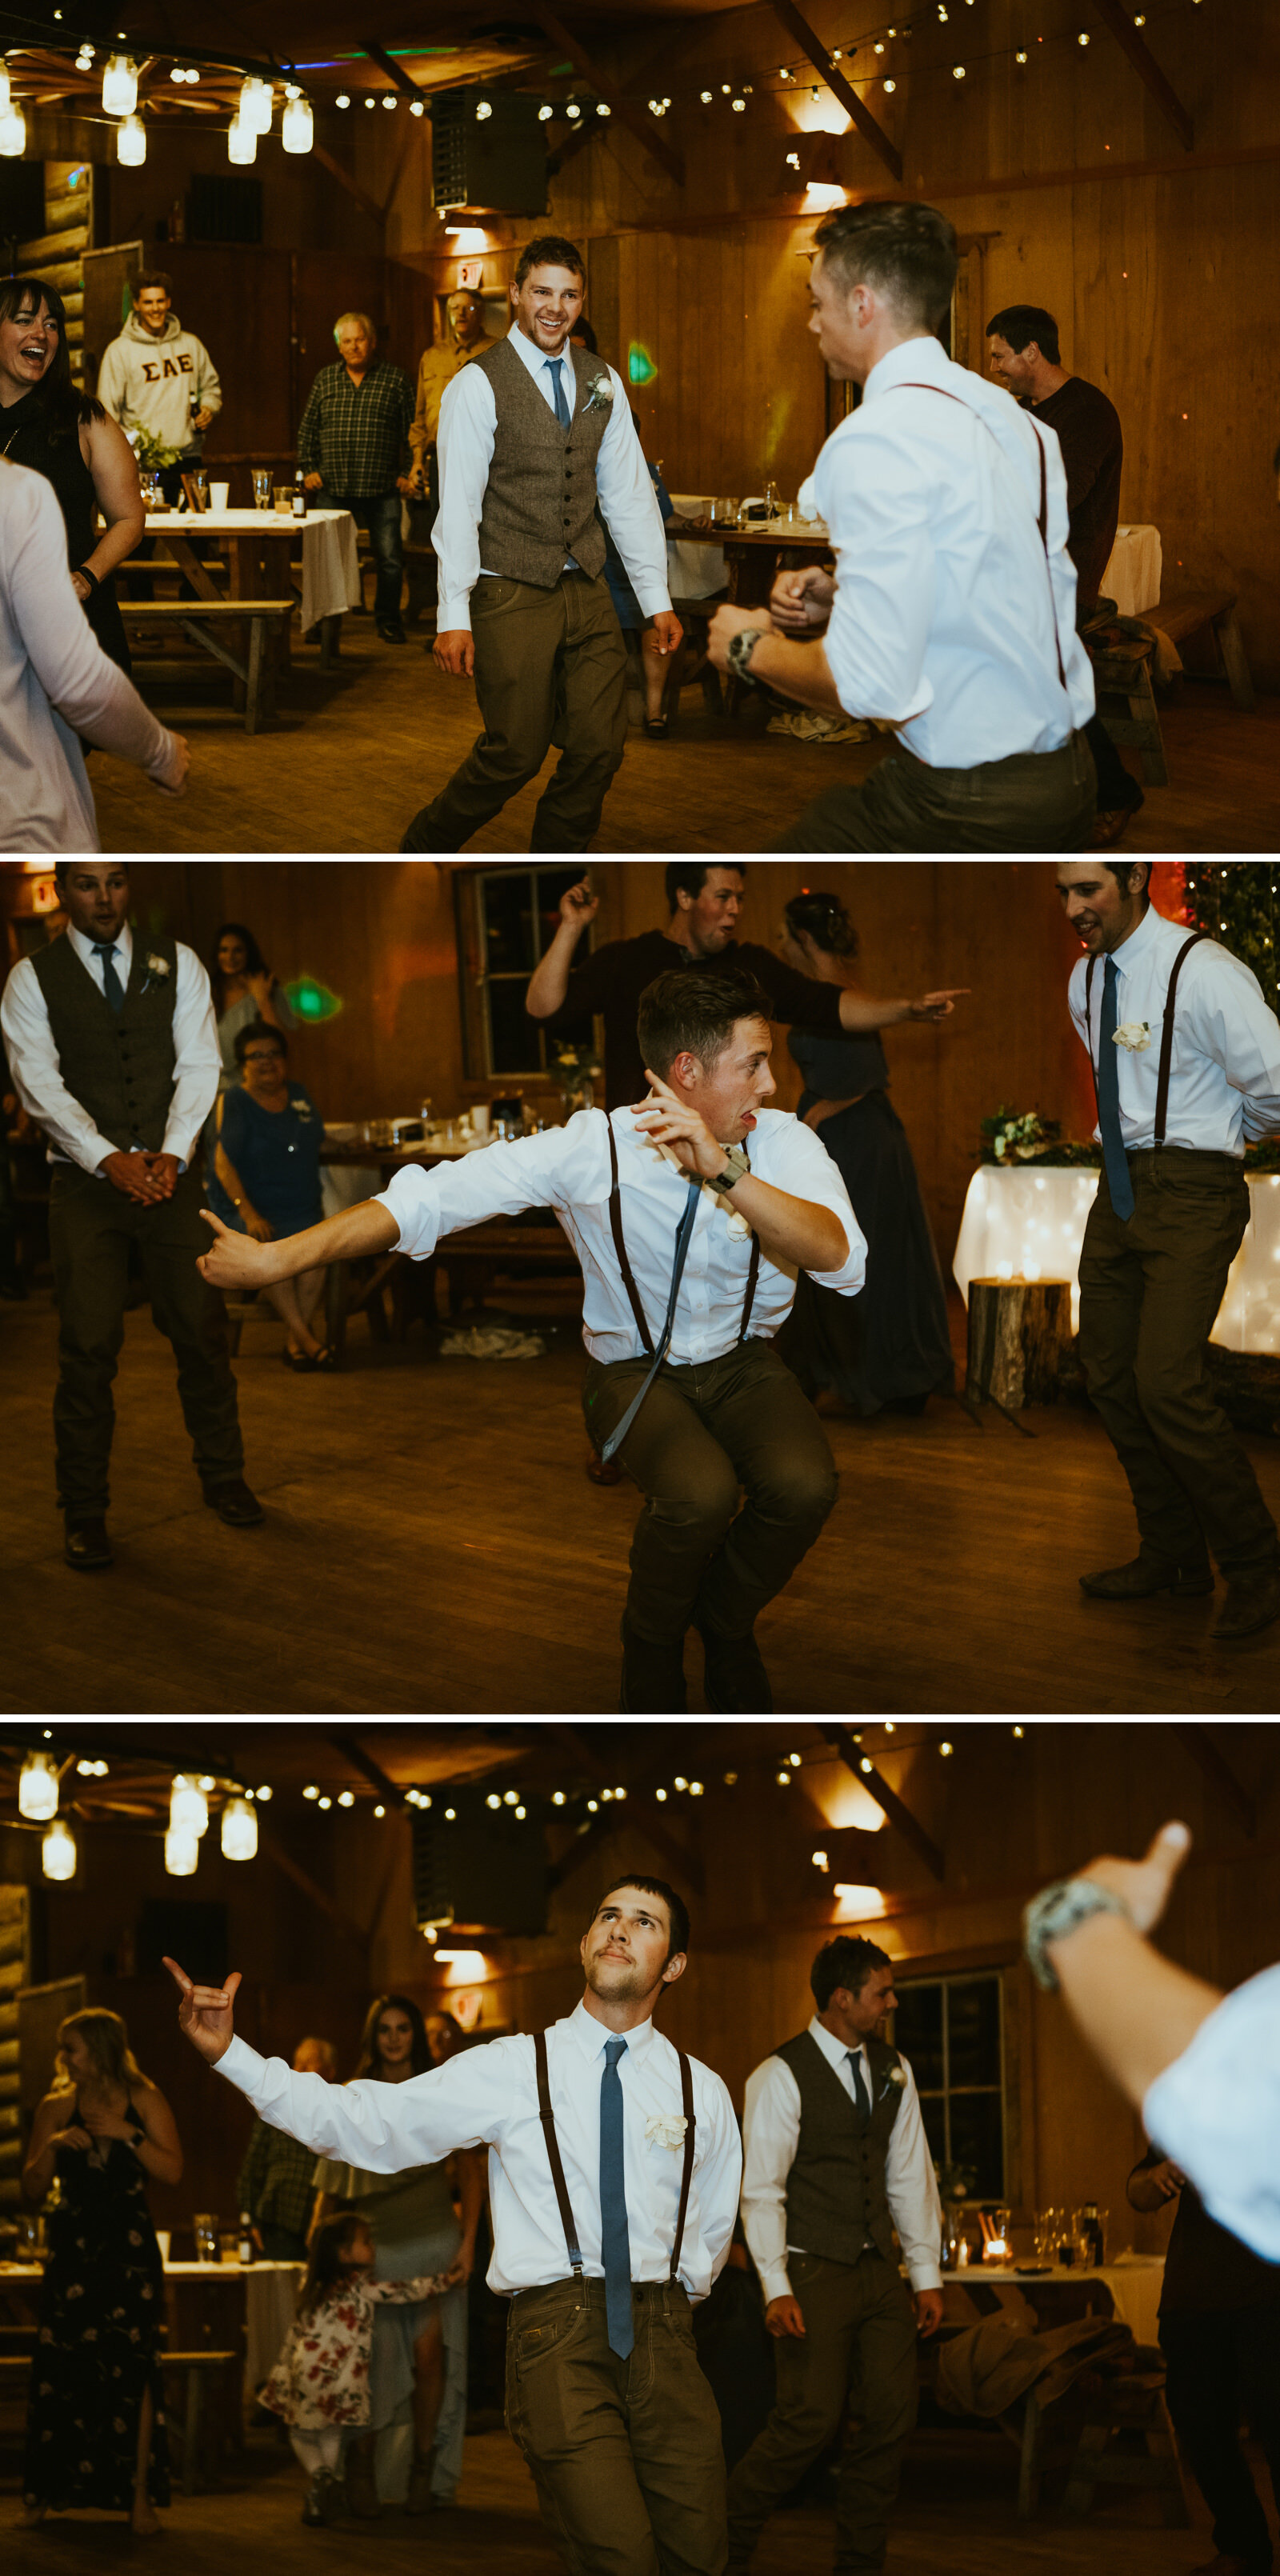 mormon lake lodge arizona wedding reception dancing.jpg